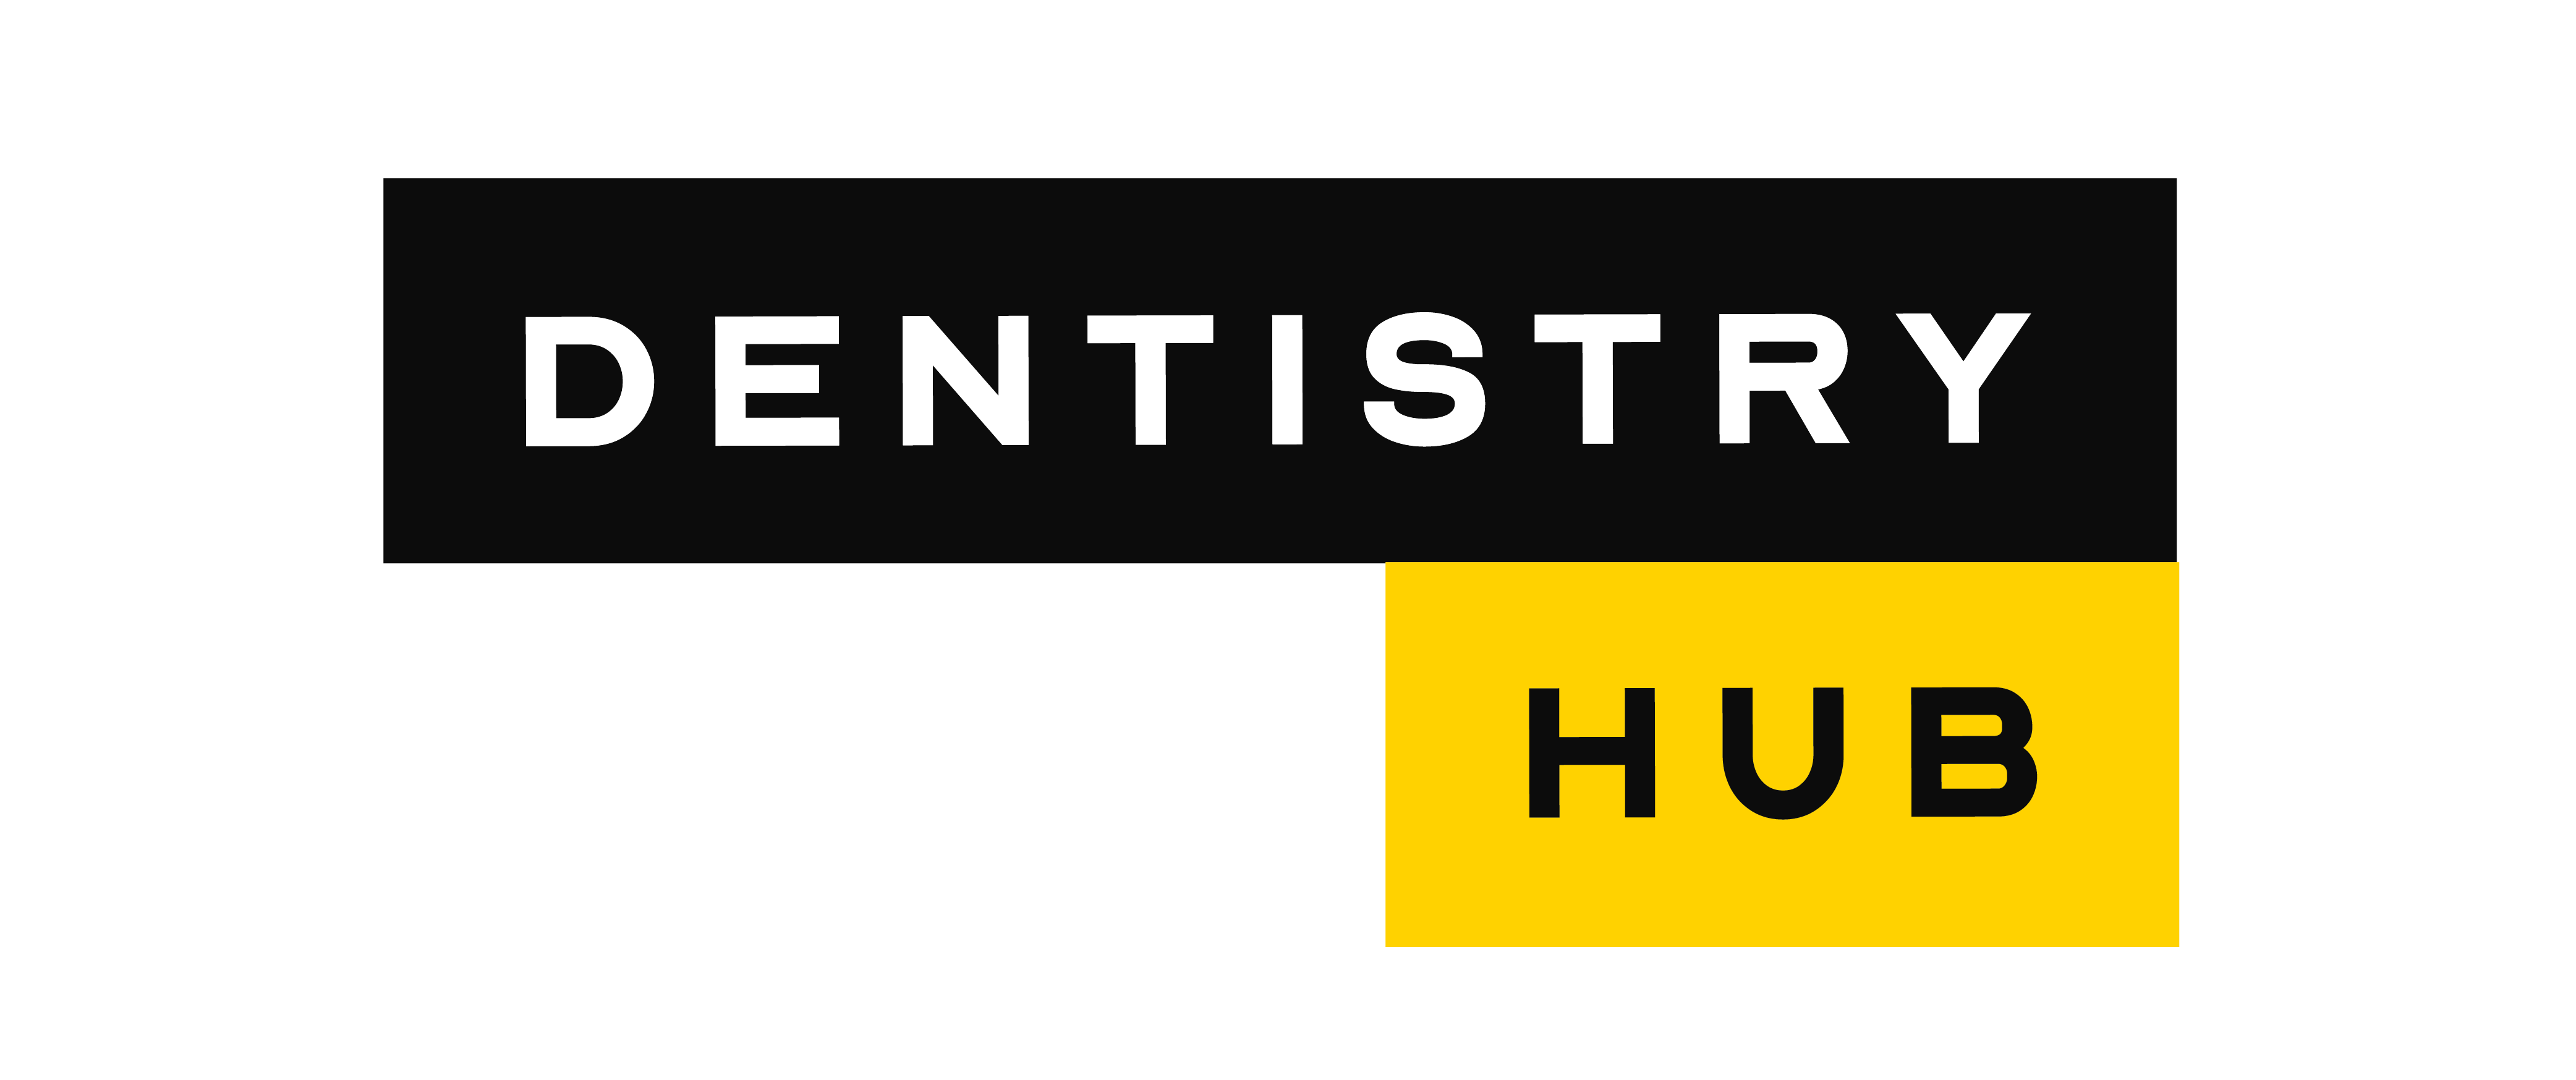 Dentistry Hub | Servicii Stomatologice Creative